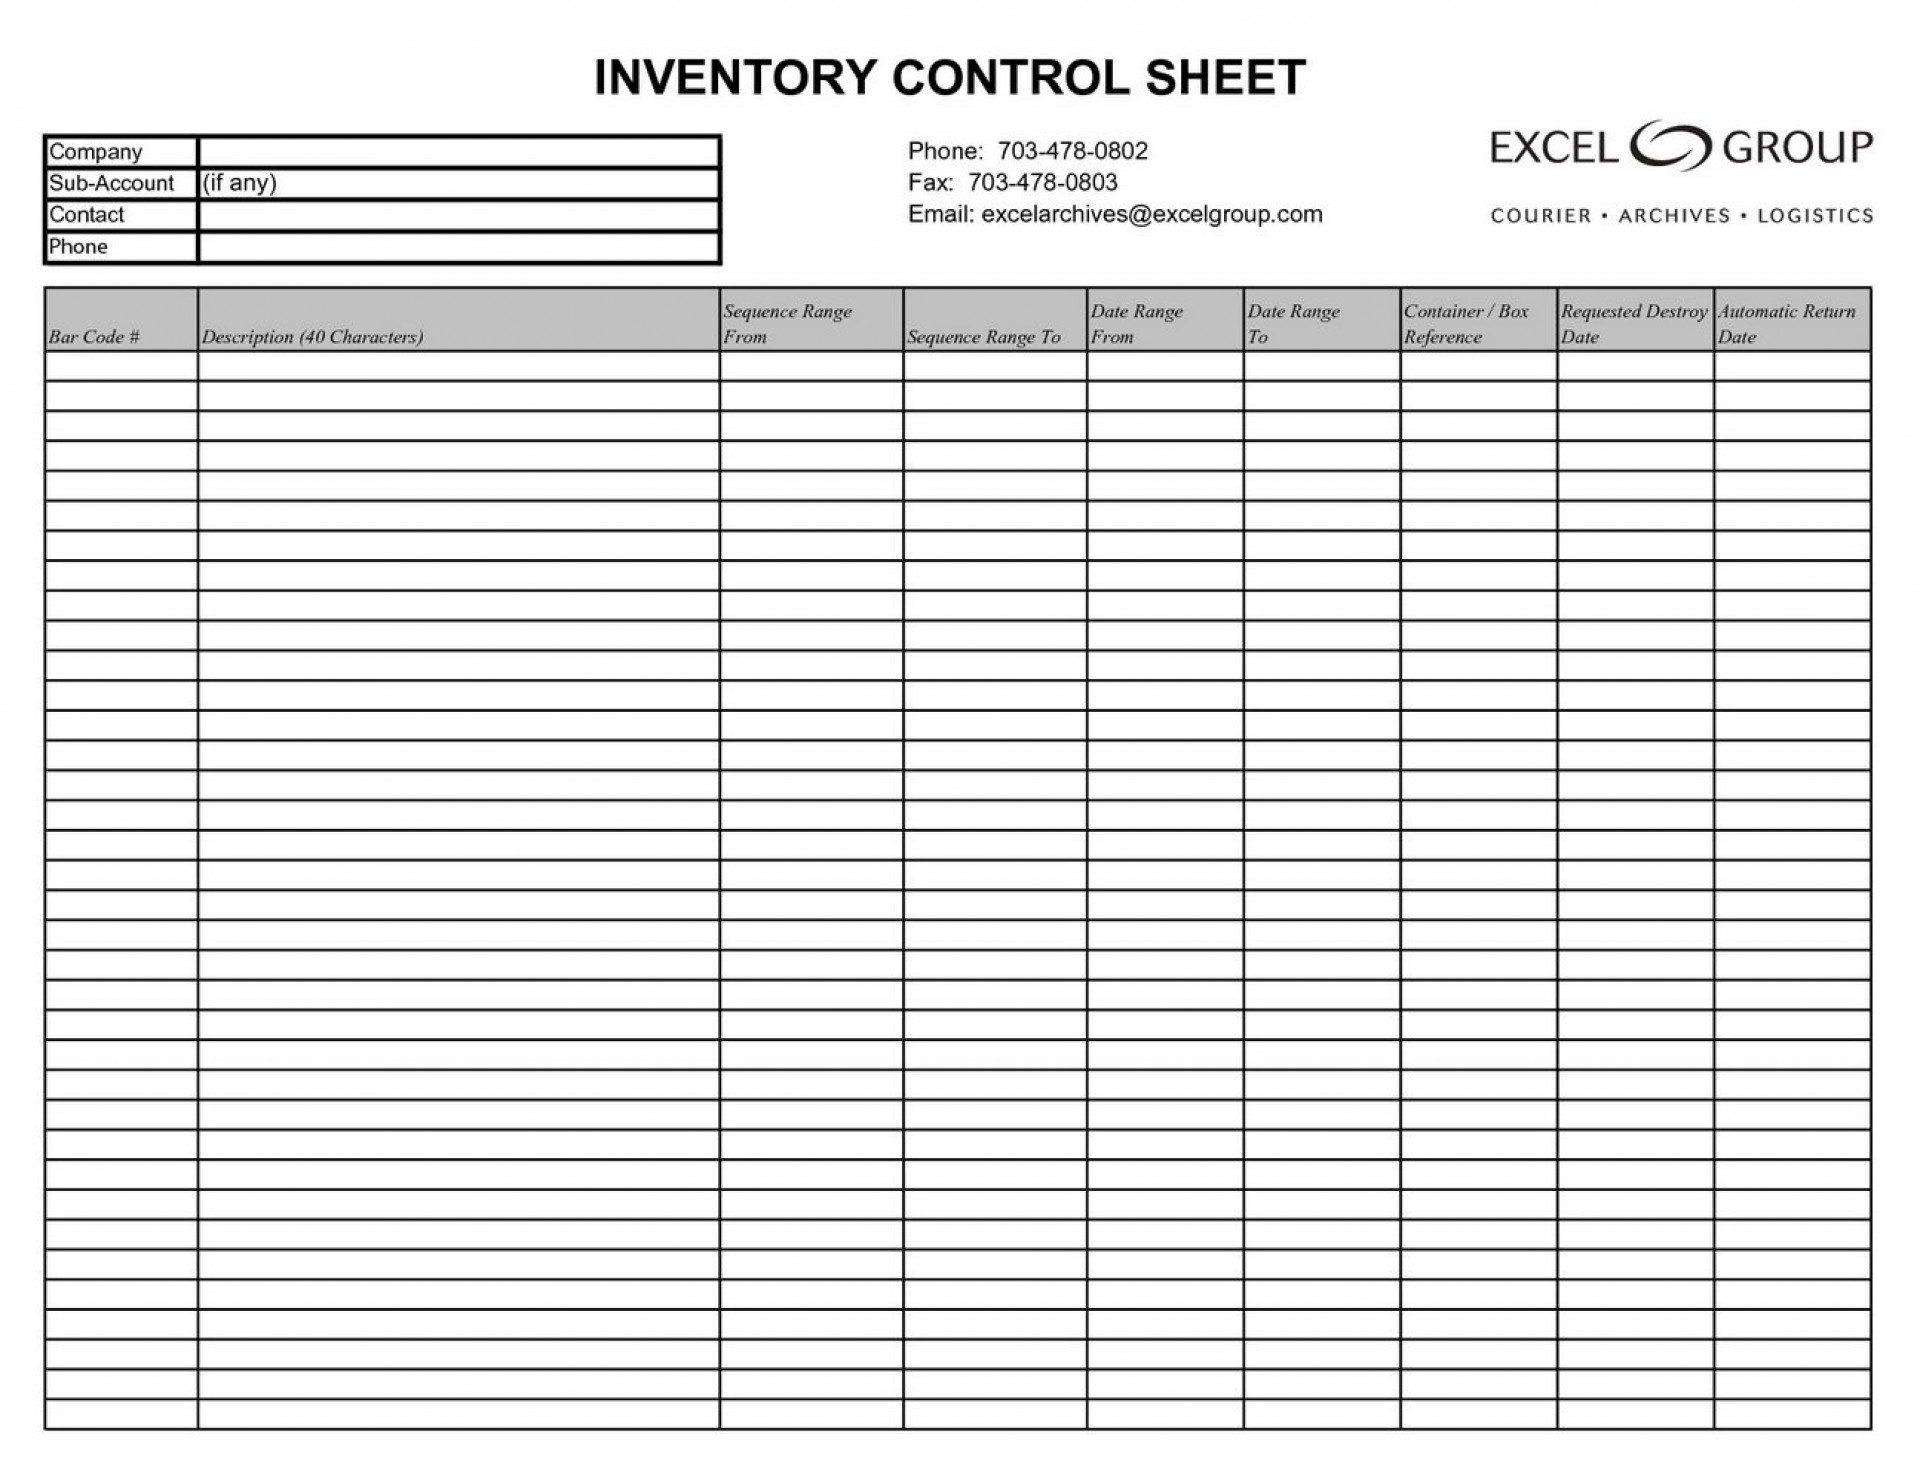 Inventory Spreadsheet Template Google Sheets Intended For 020 Inventory Spreadsheet Template Google Docs Ideas ~ Ulyssesroom